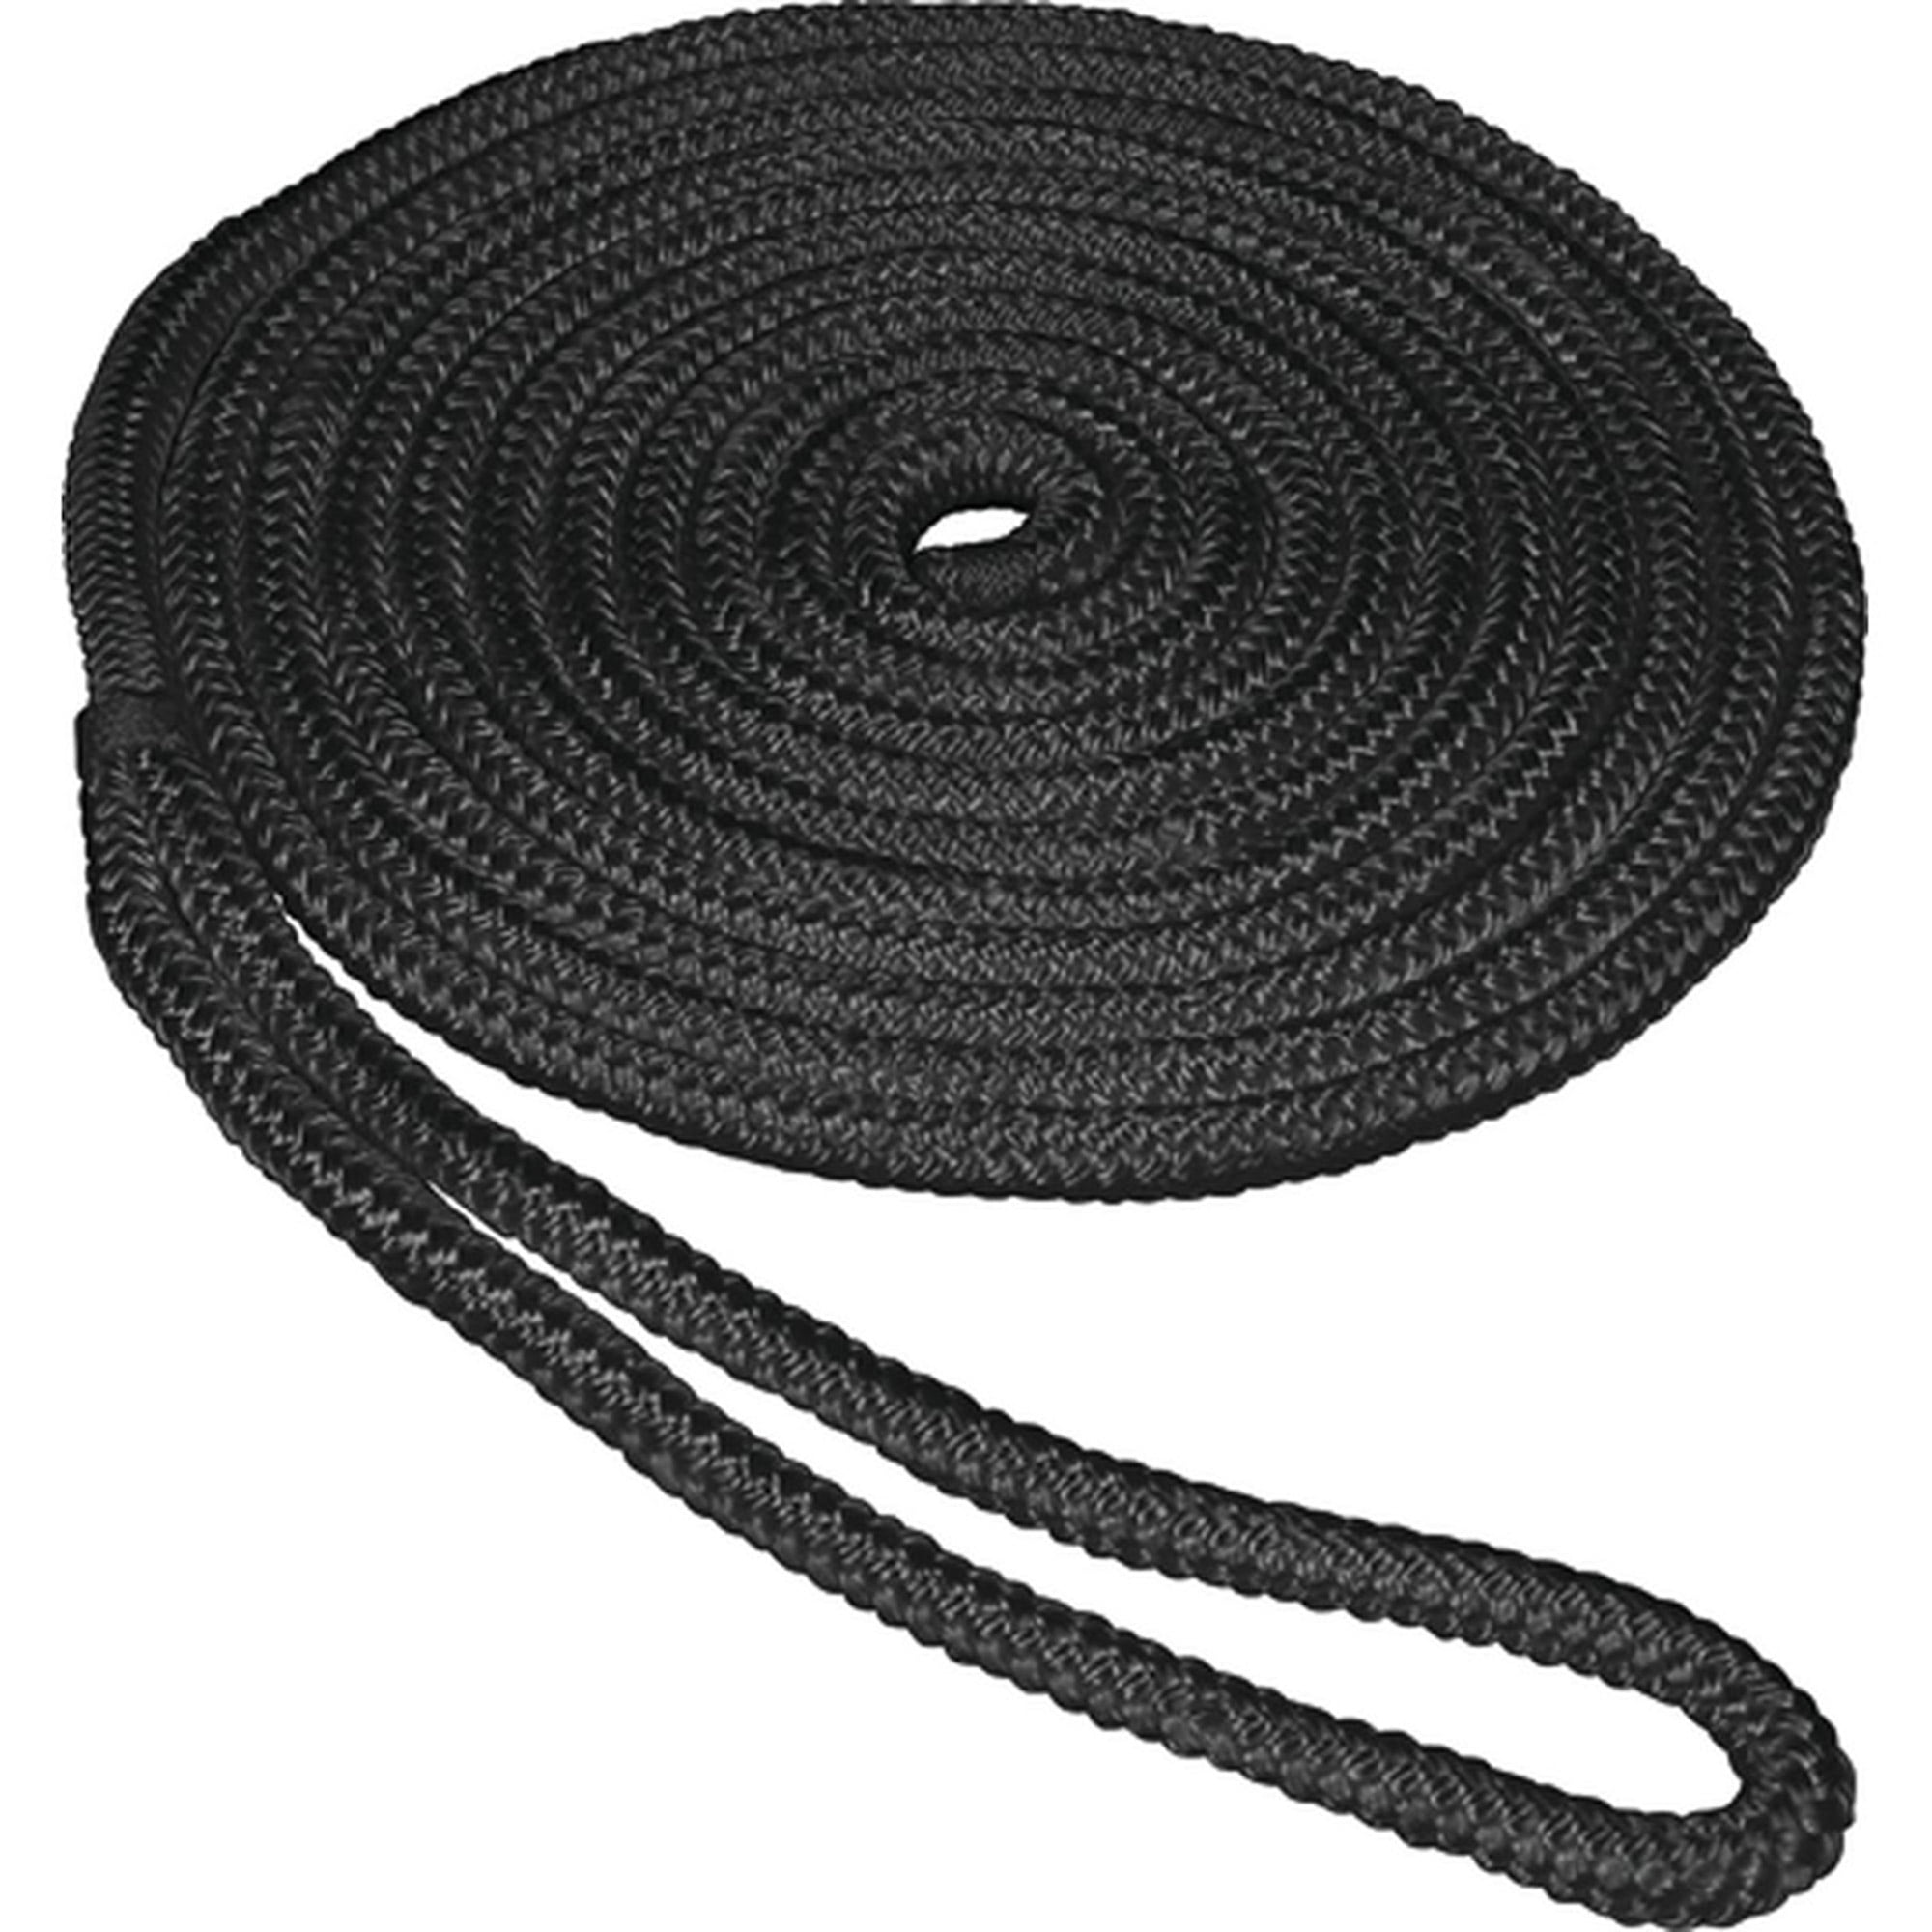 US Ropes Nylon Double Braided Dock Line 1/2 x 15 Black 